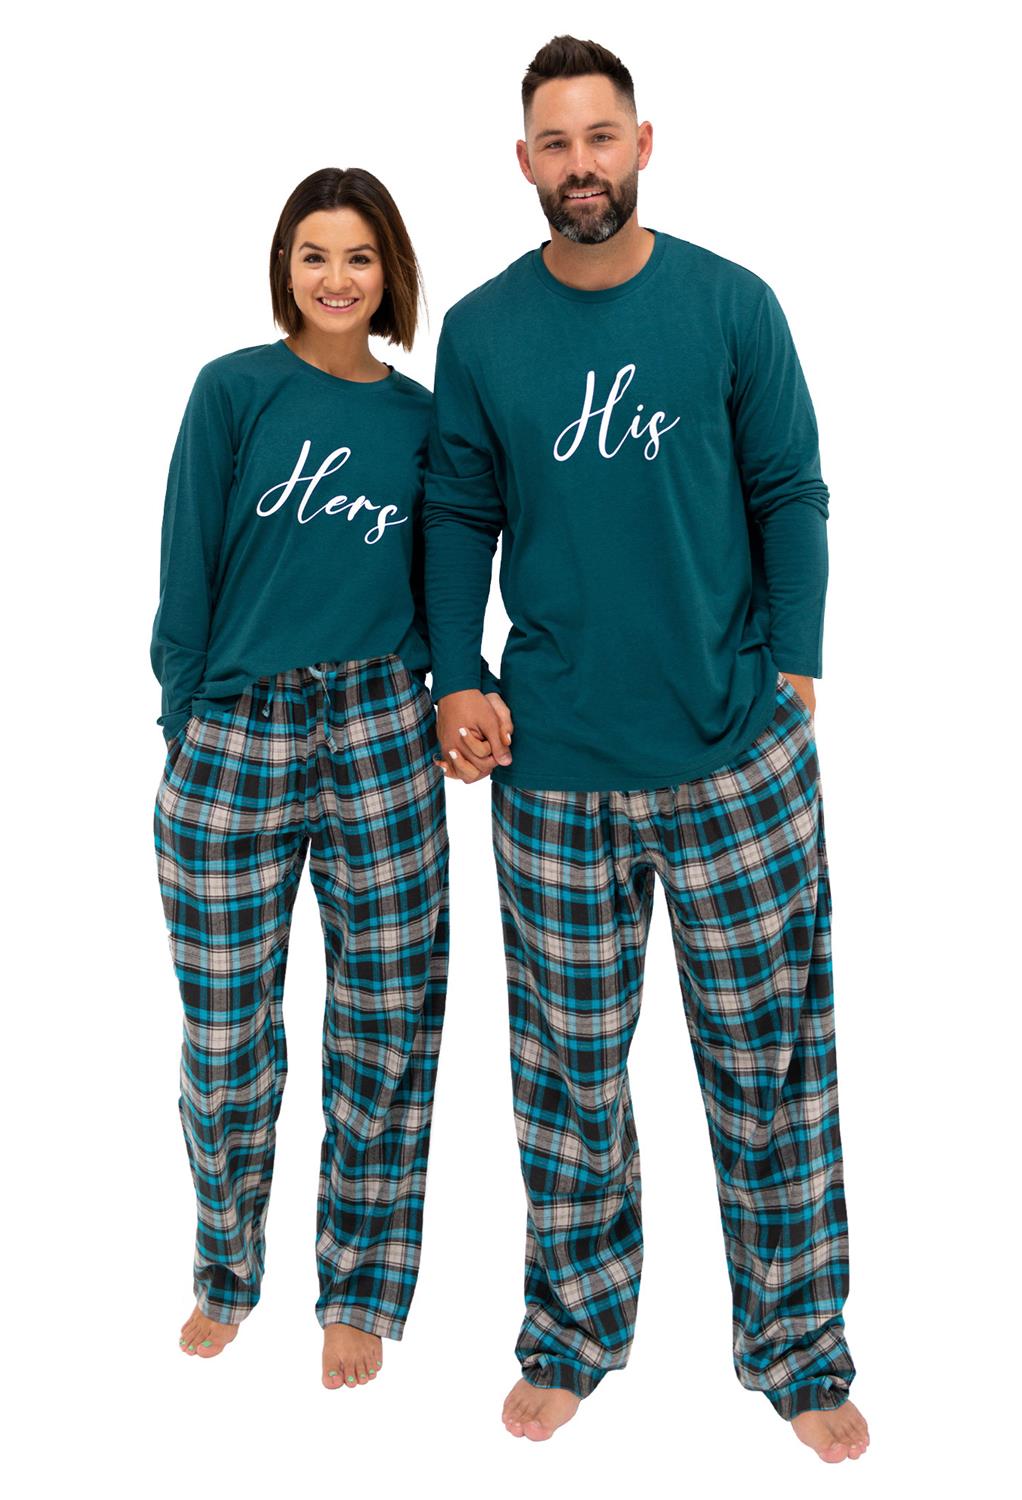 AW Cotton Couples Pajamas Sets